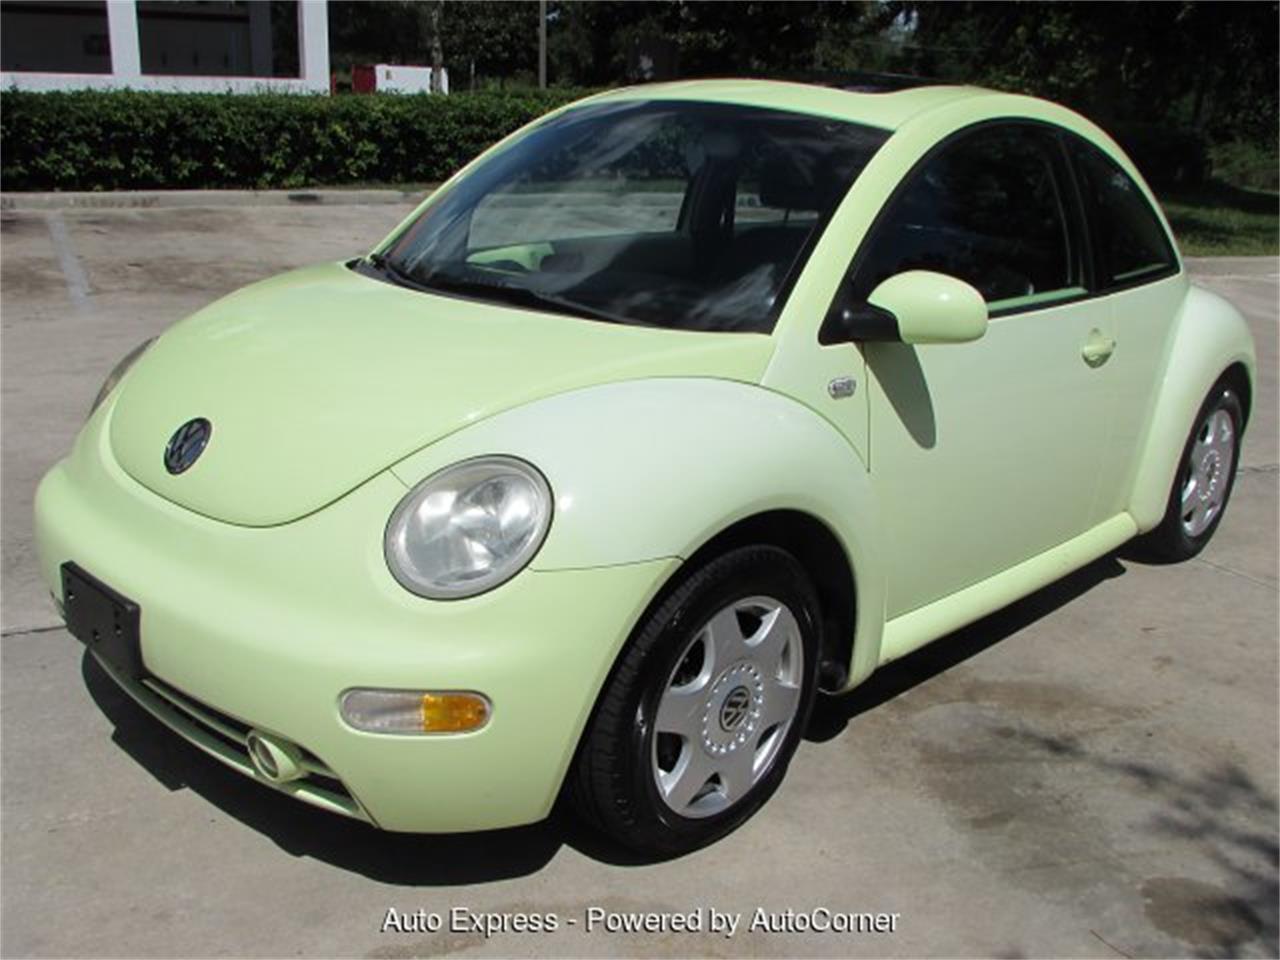 2001 Volkswagen Beetle for Sale | ClassicCars.com | CC-1147529